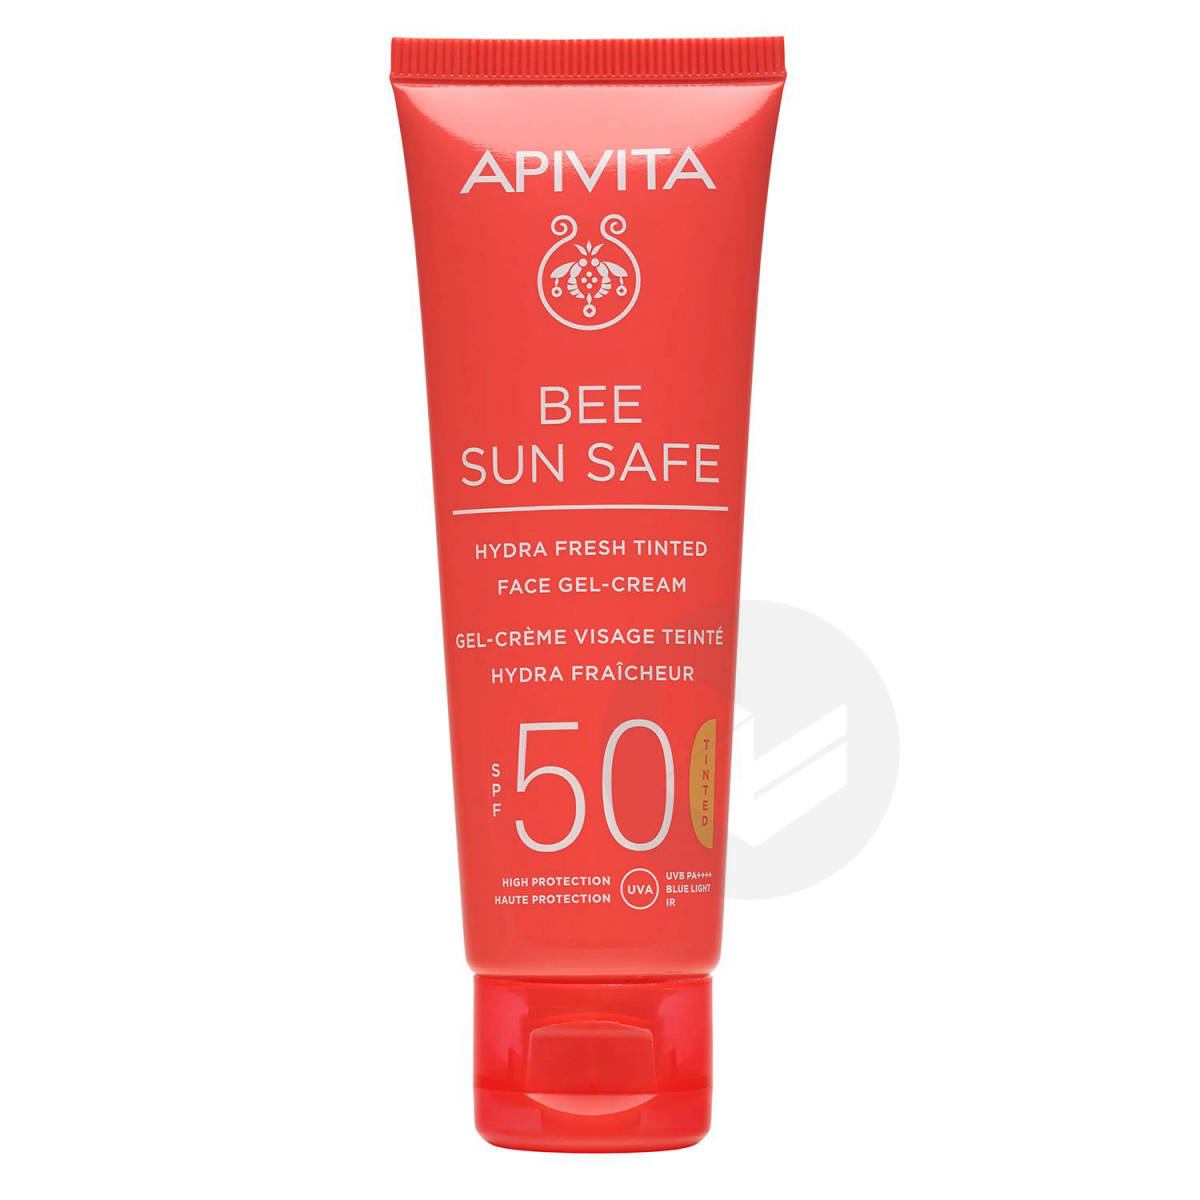 Bee sun safe gel-crème visage teinté SPF50 50ml